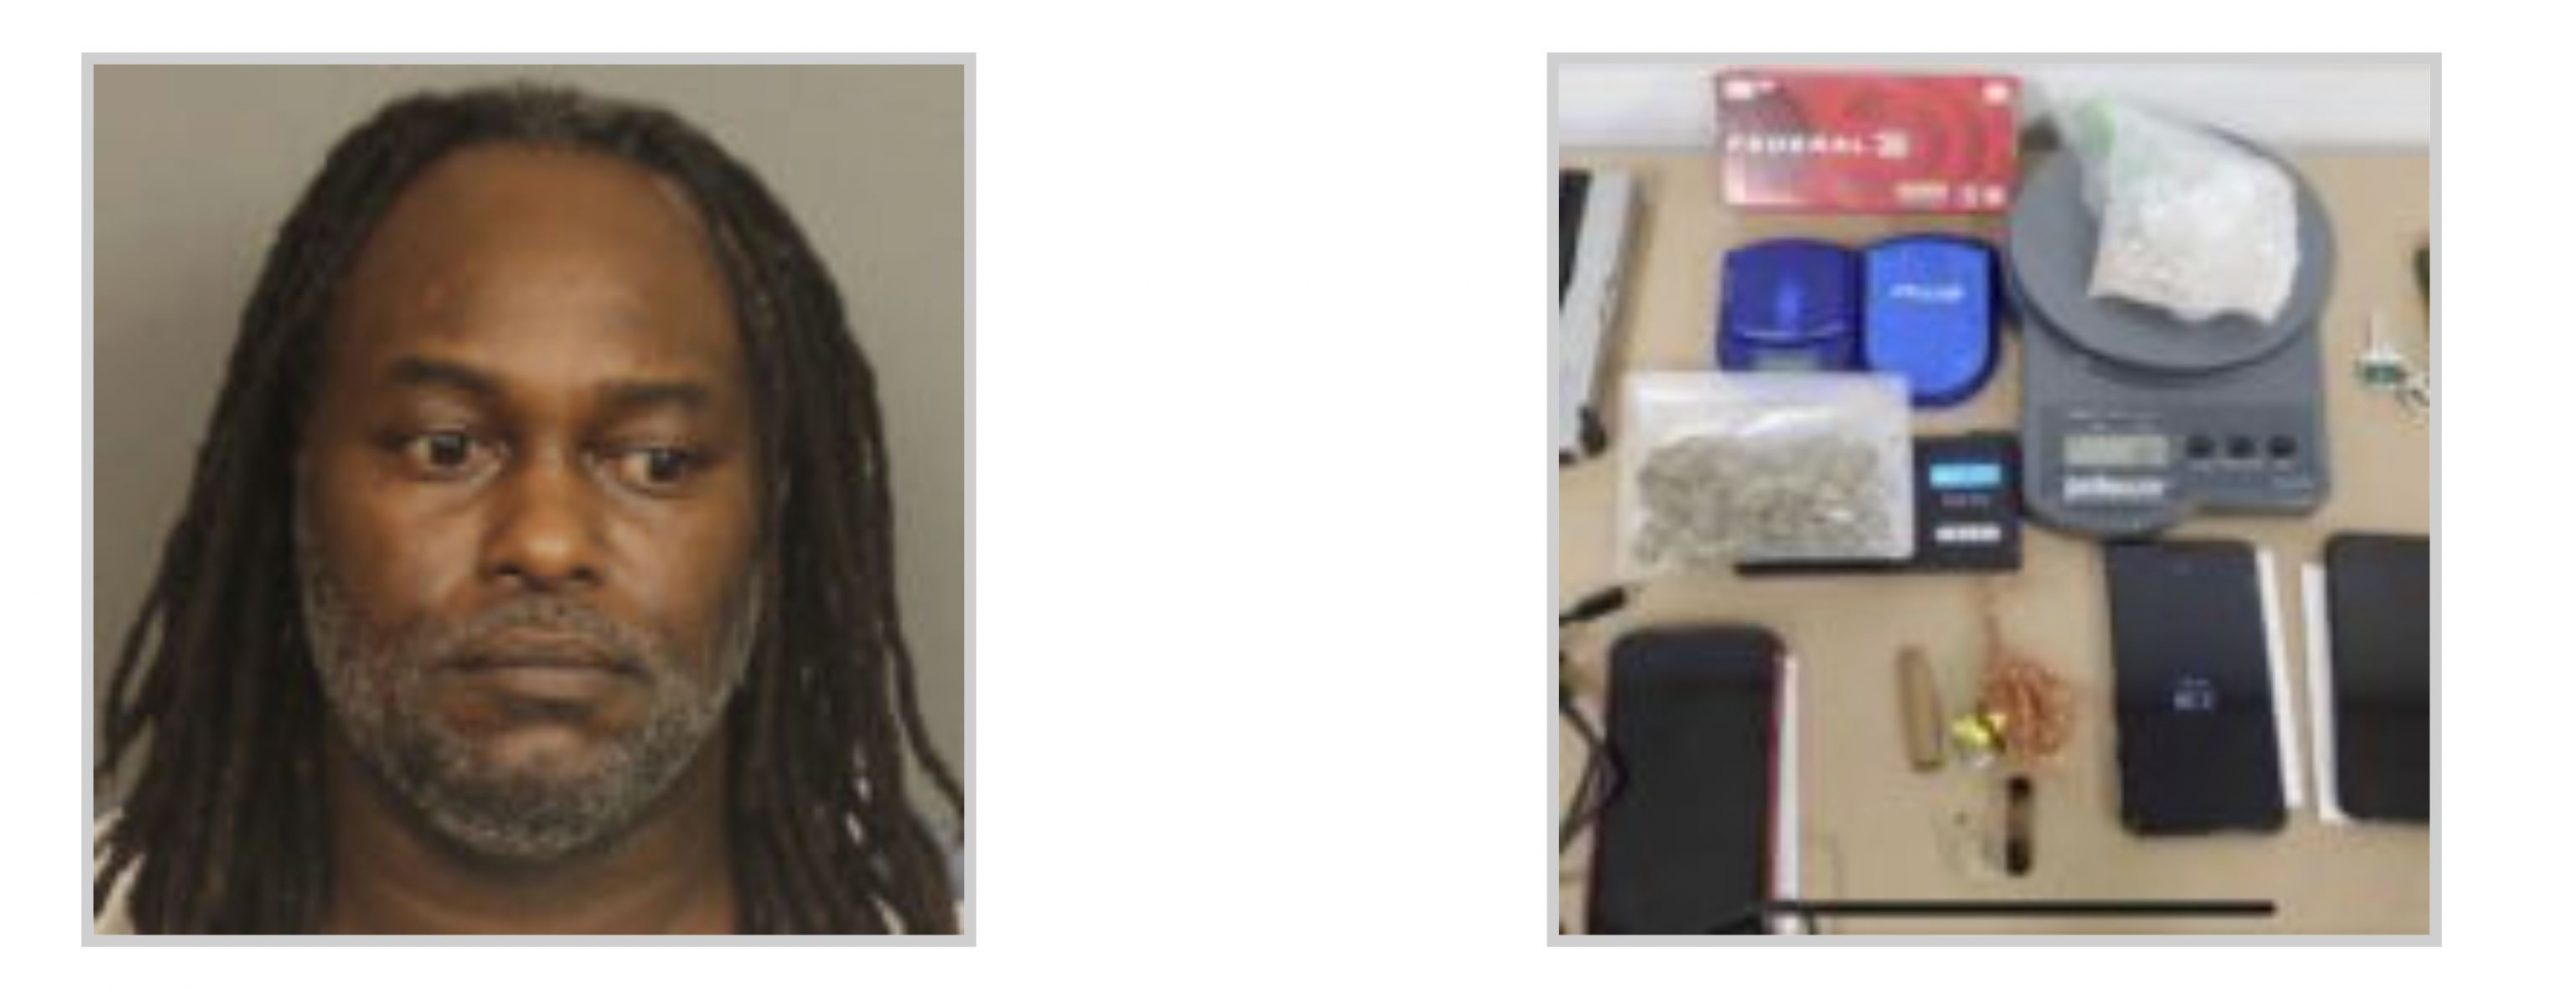 Jefferson County Vice & Narcotics unit seize ecstasy, marijuana and illegal firearm